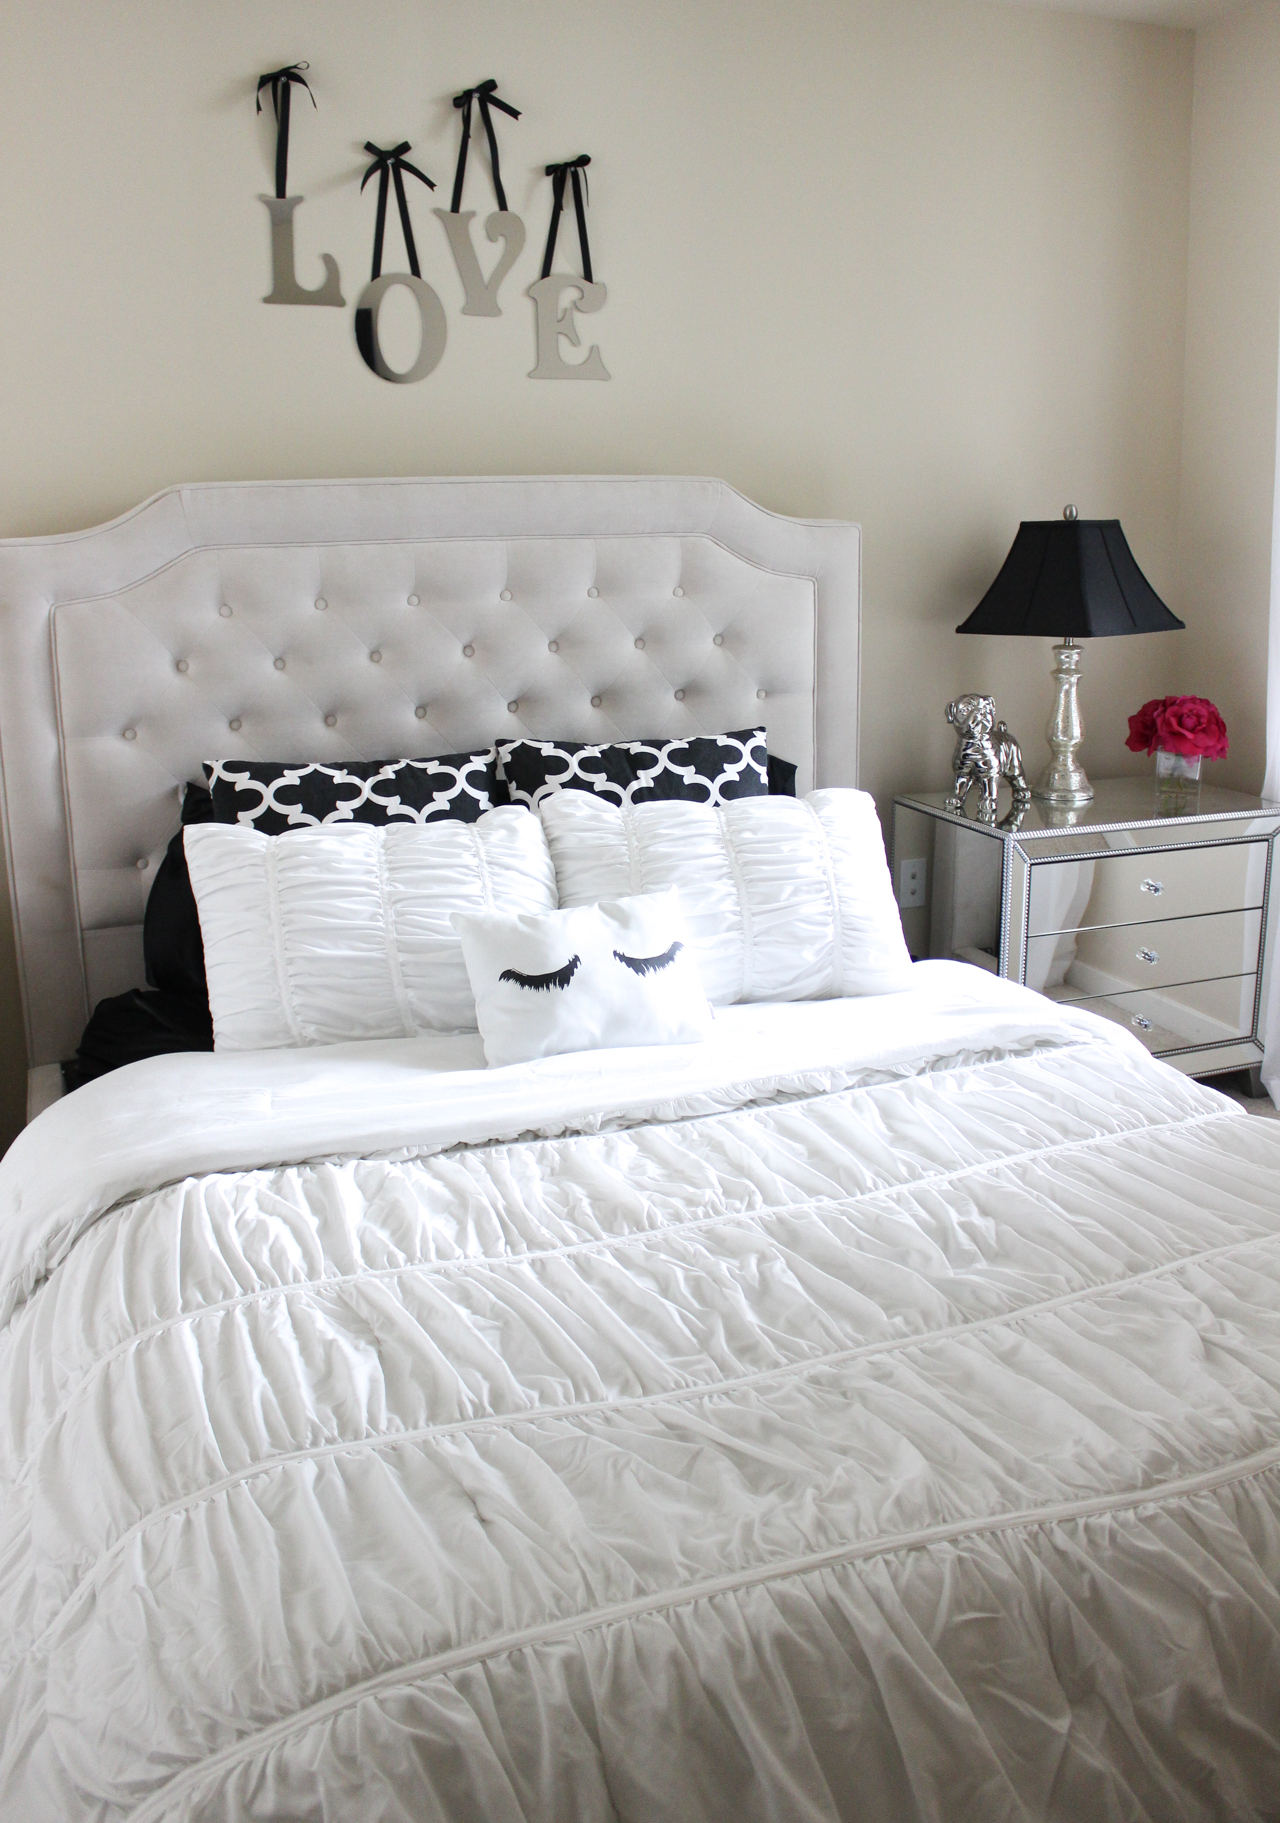 Black & White Bedroom Decor | StyledByBlondie.com